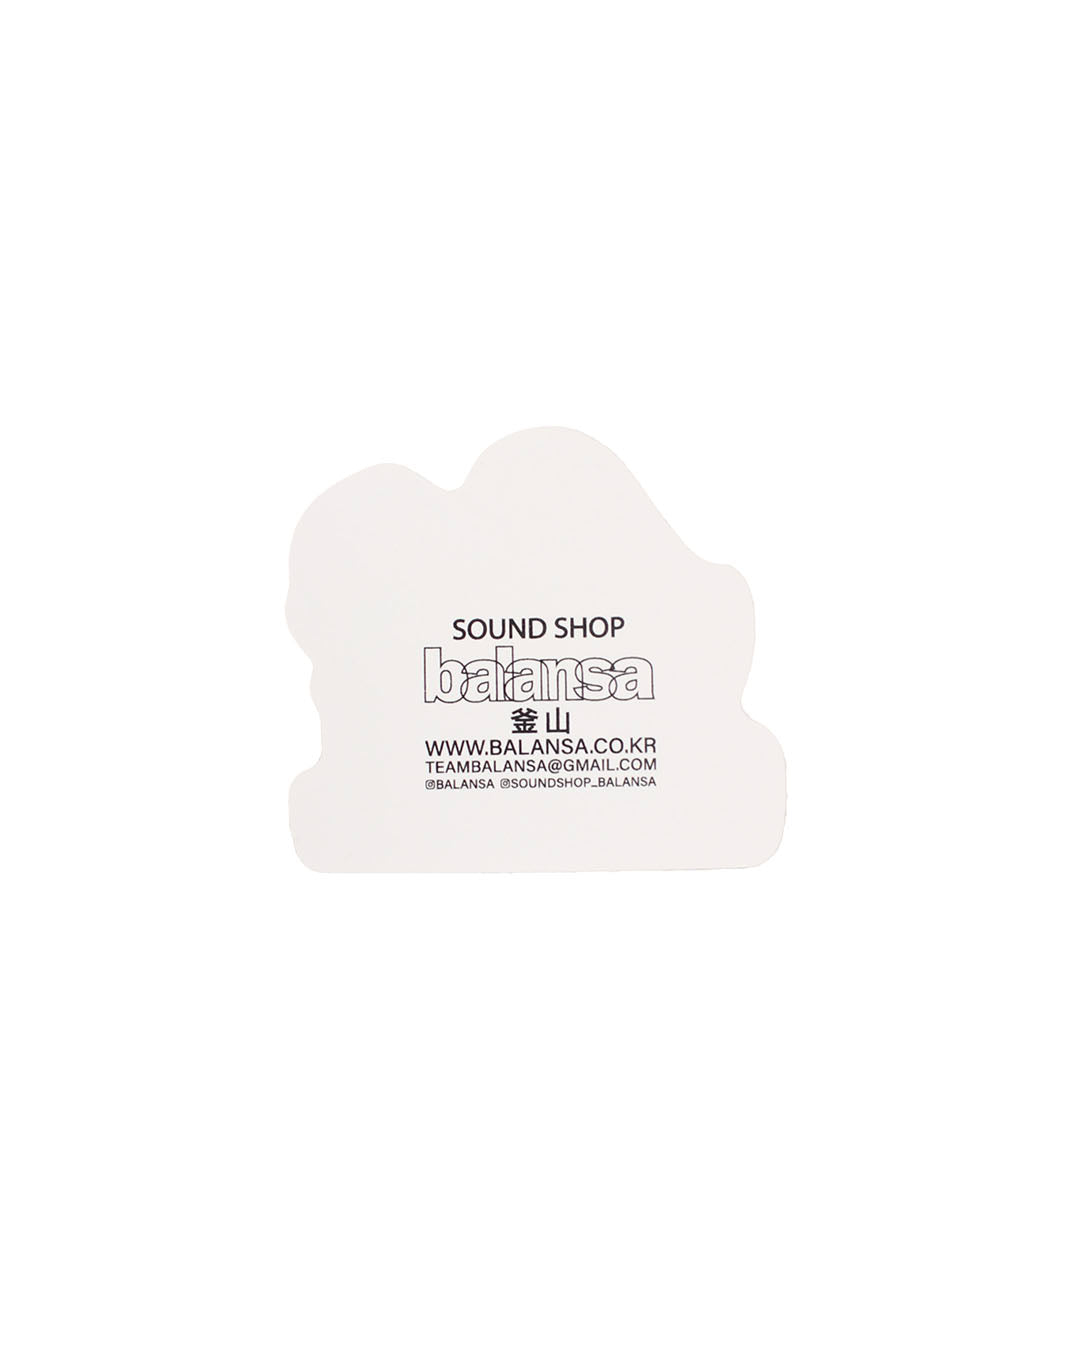 【SOUND SHOP BALANSA】BALANSA 15ANN STICKER PACK (3PCS)